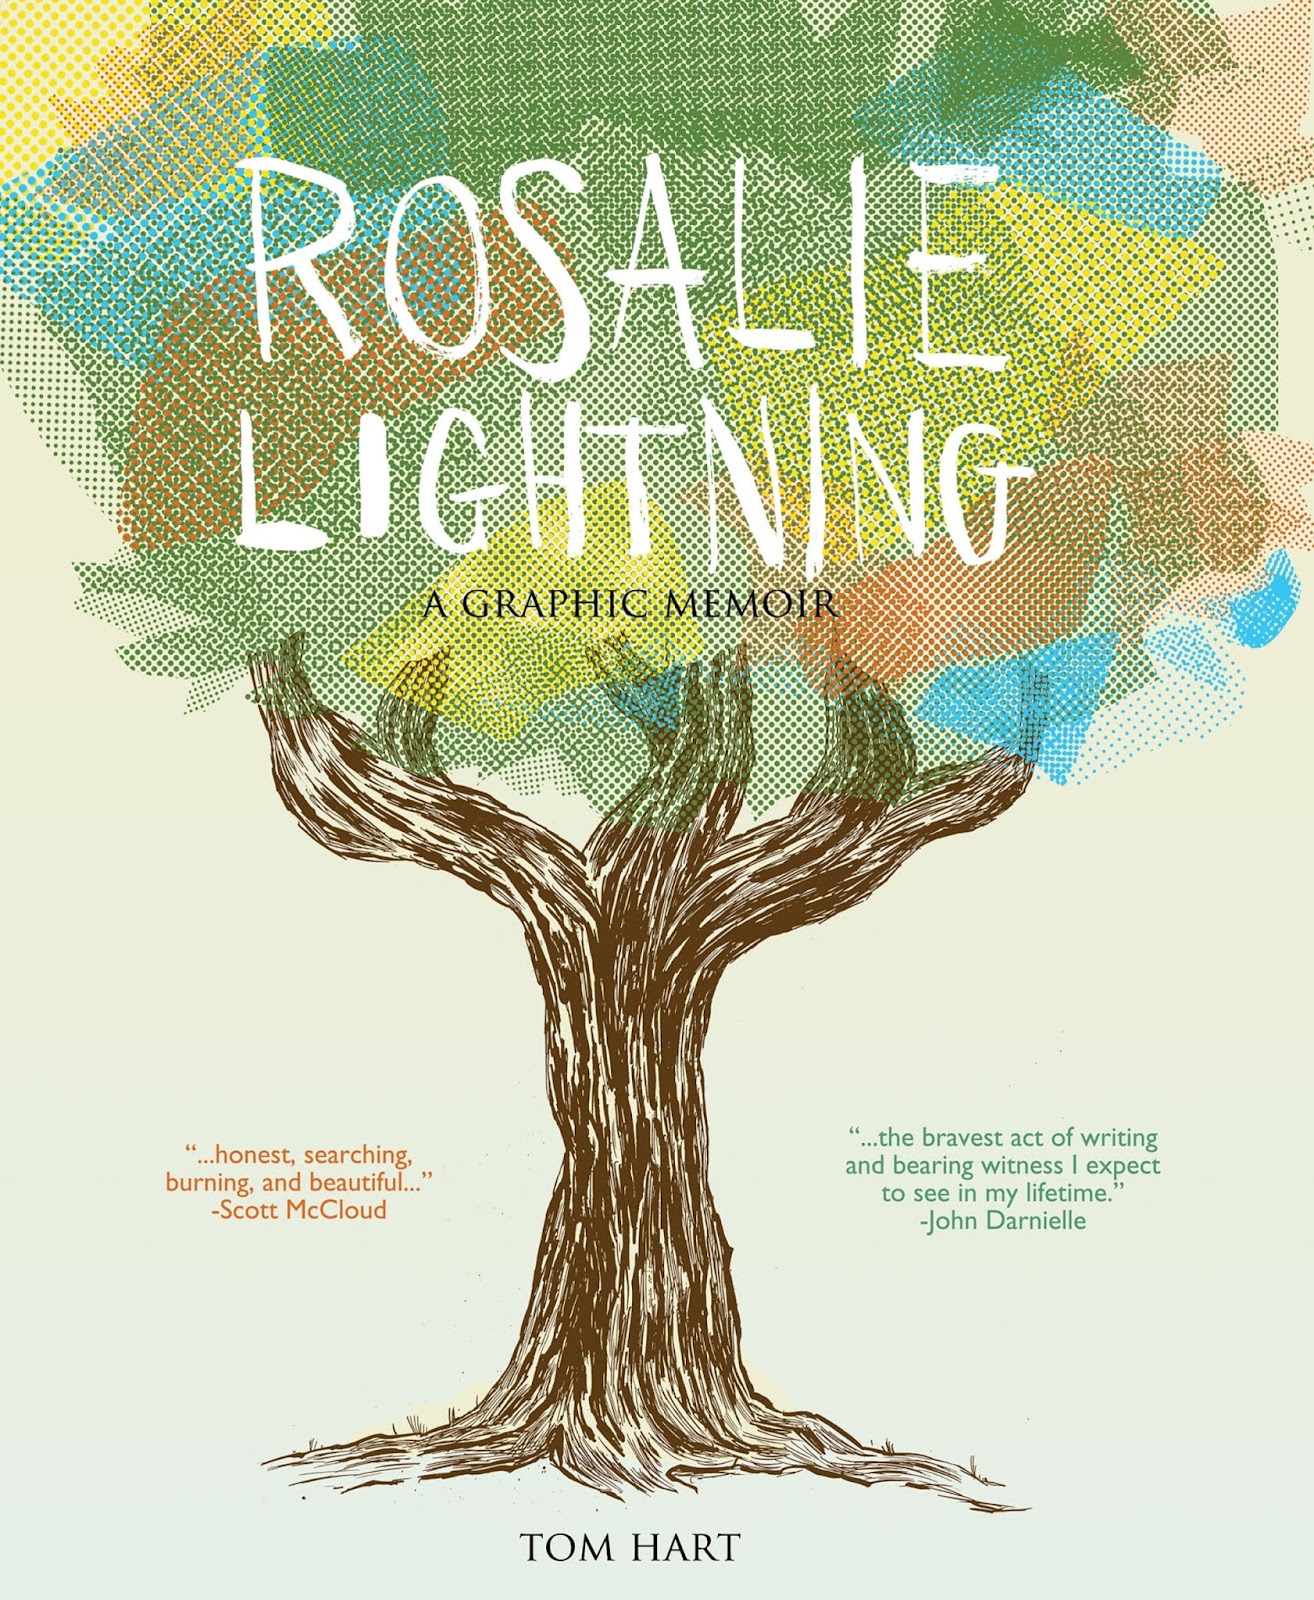 Rosalie Lightning: A Graphic Memoir TPB (Part 1) Page 1